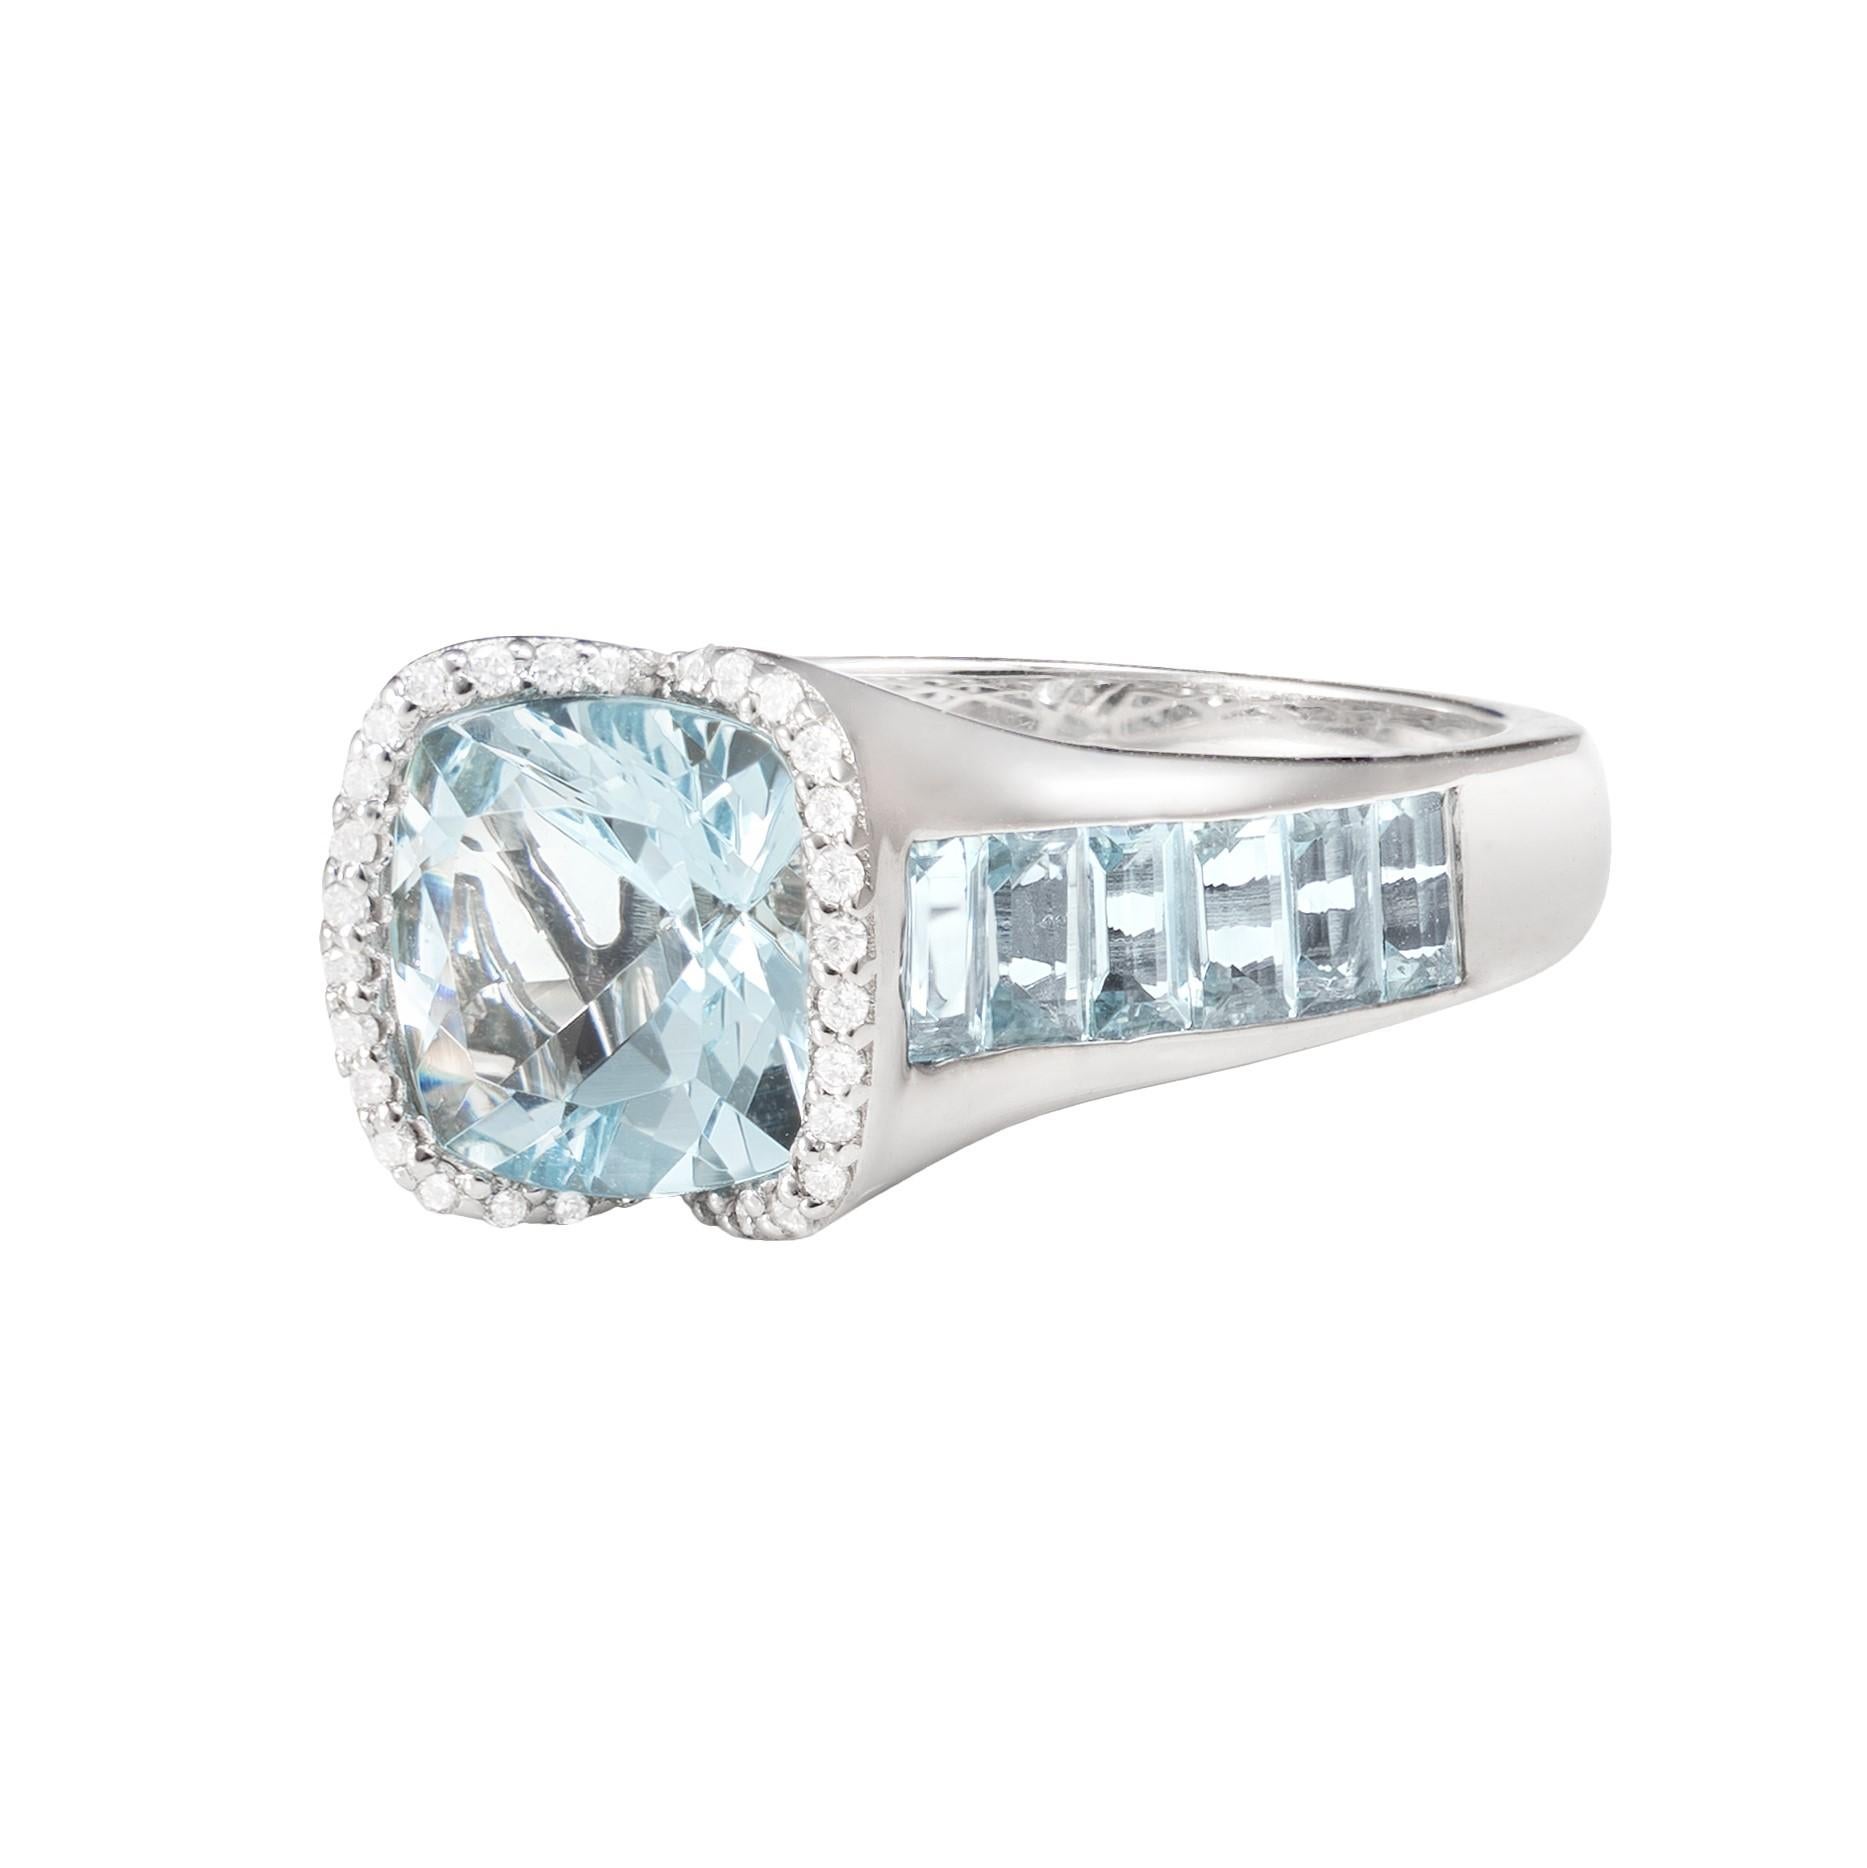 2.6 carat diamond ring